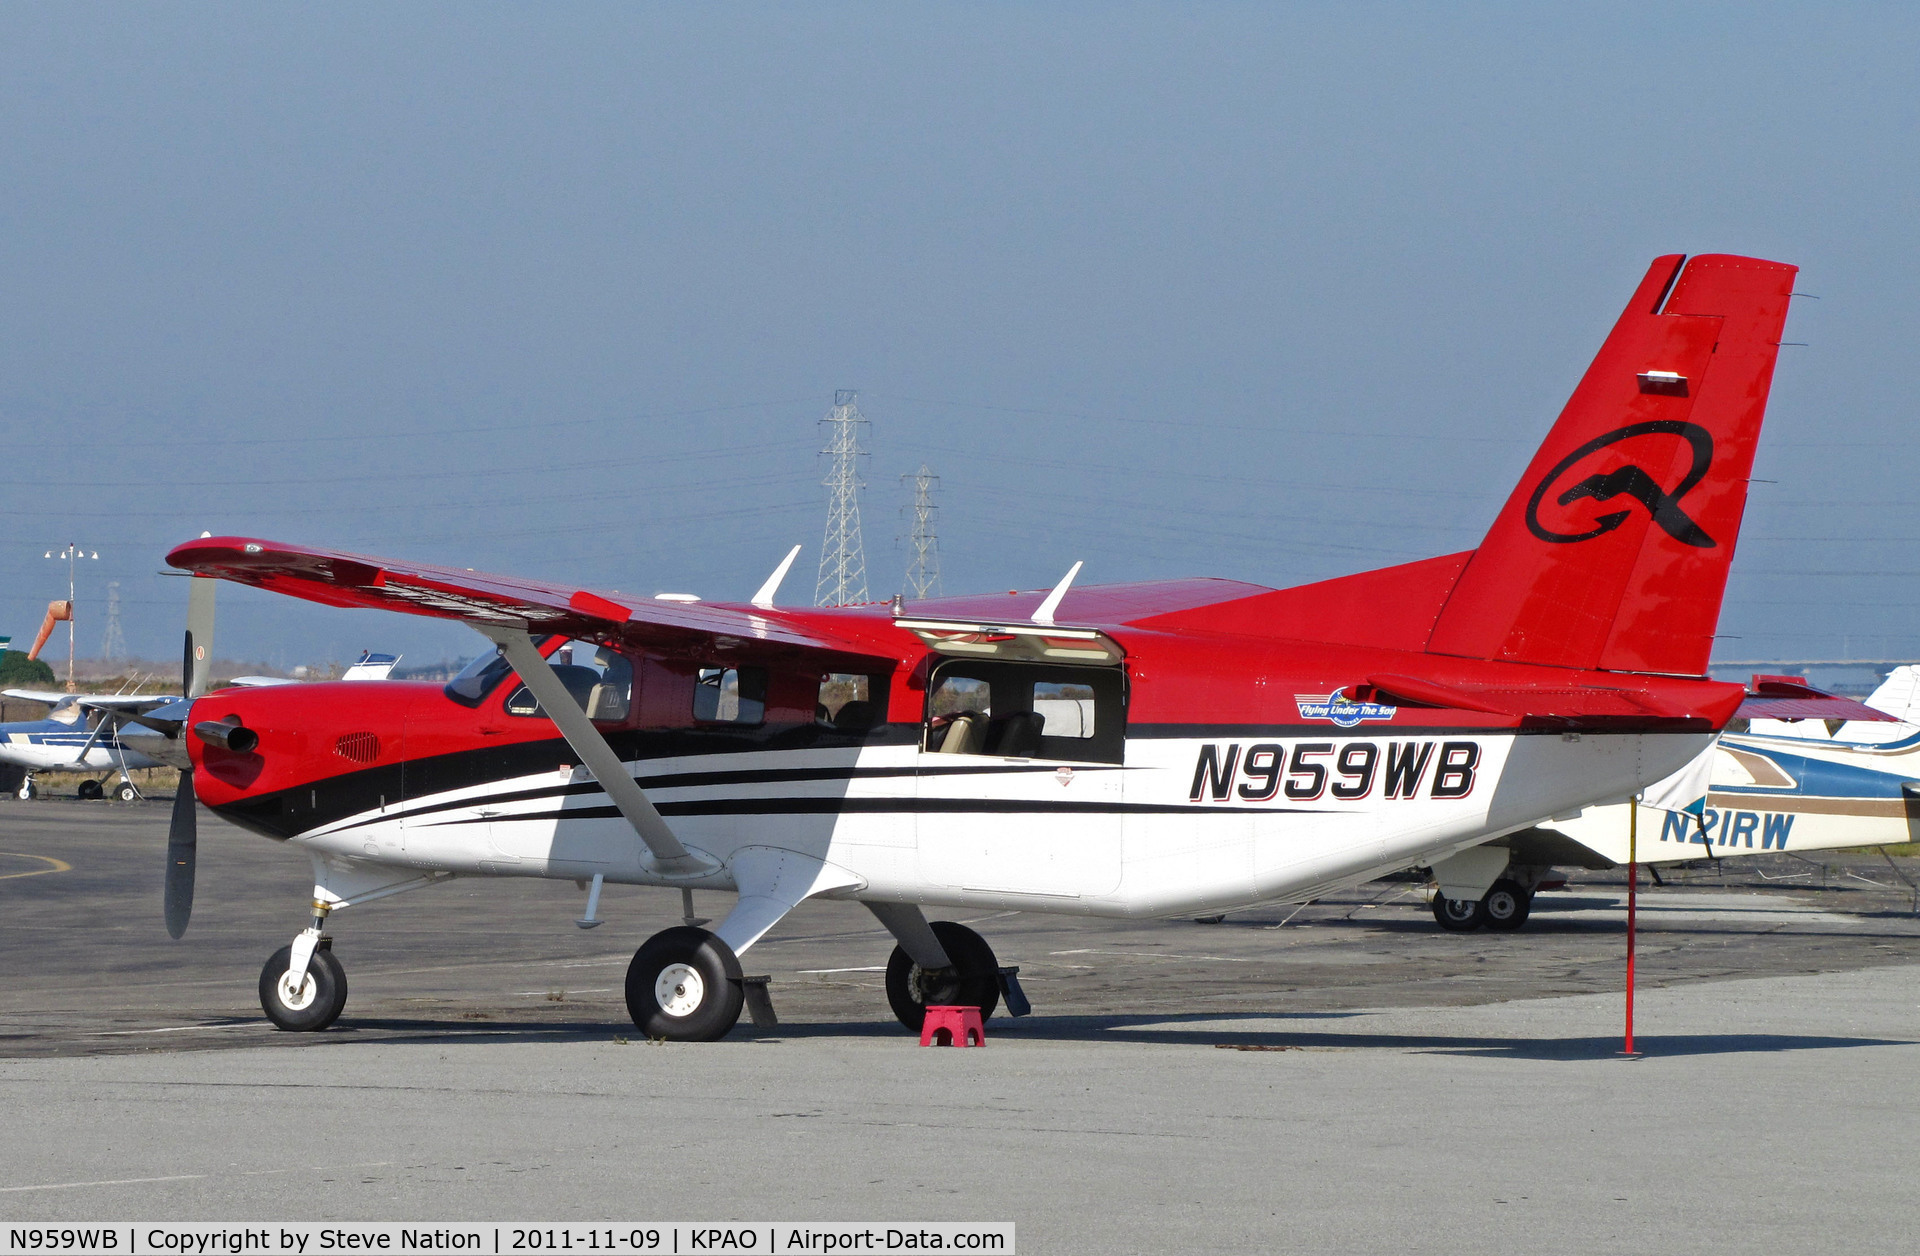 N959WB, 2009 Quest Kodiak 100 C/N 100-0016, Open Door Aviation (Oxnard, CA) 2009 Quest Kodiak 100 @ Palo Alto, CA with 